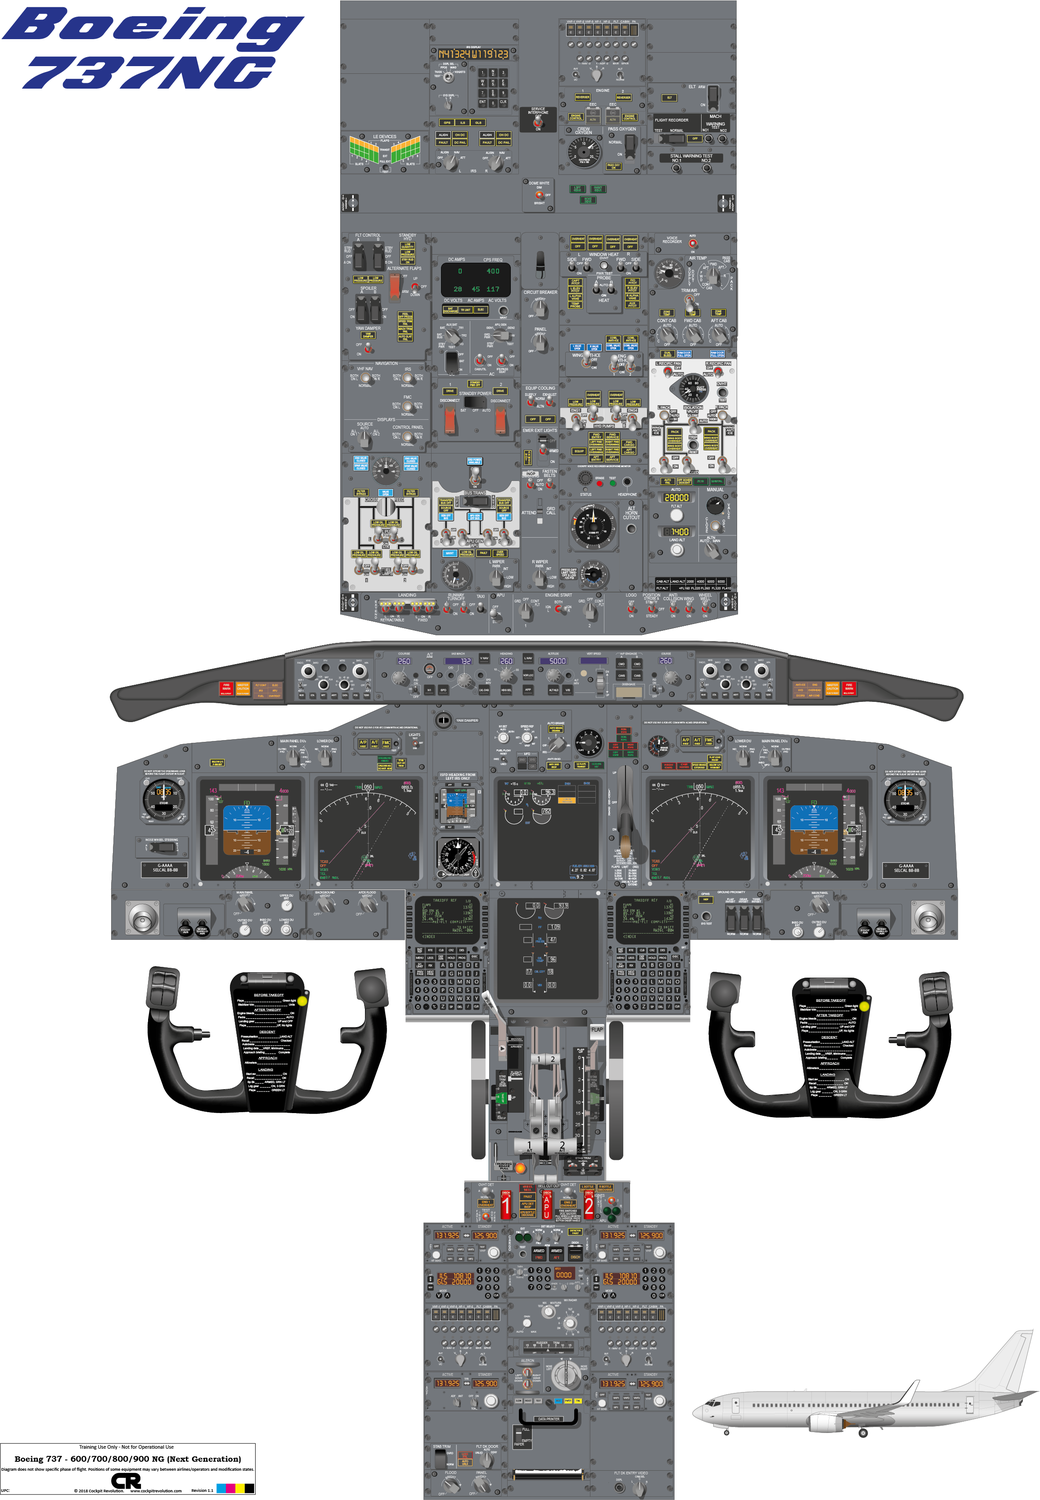 Boeing 737 NG Cockpit Poster